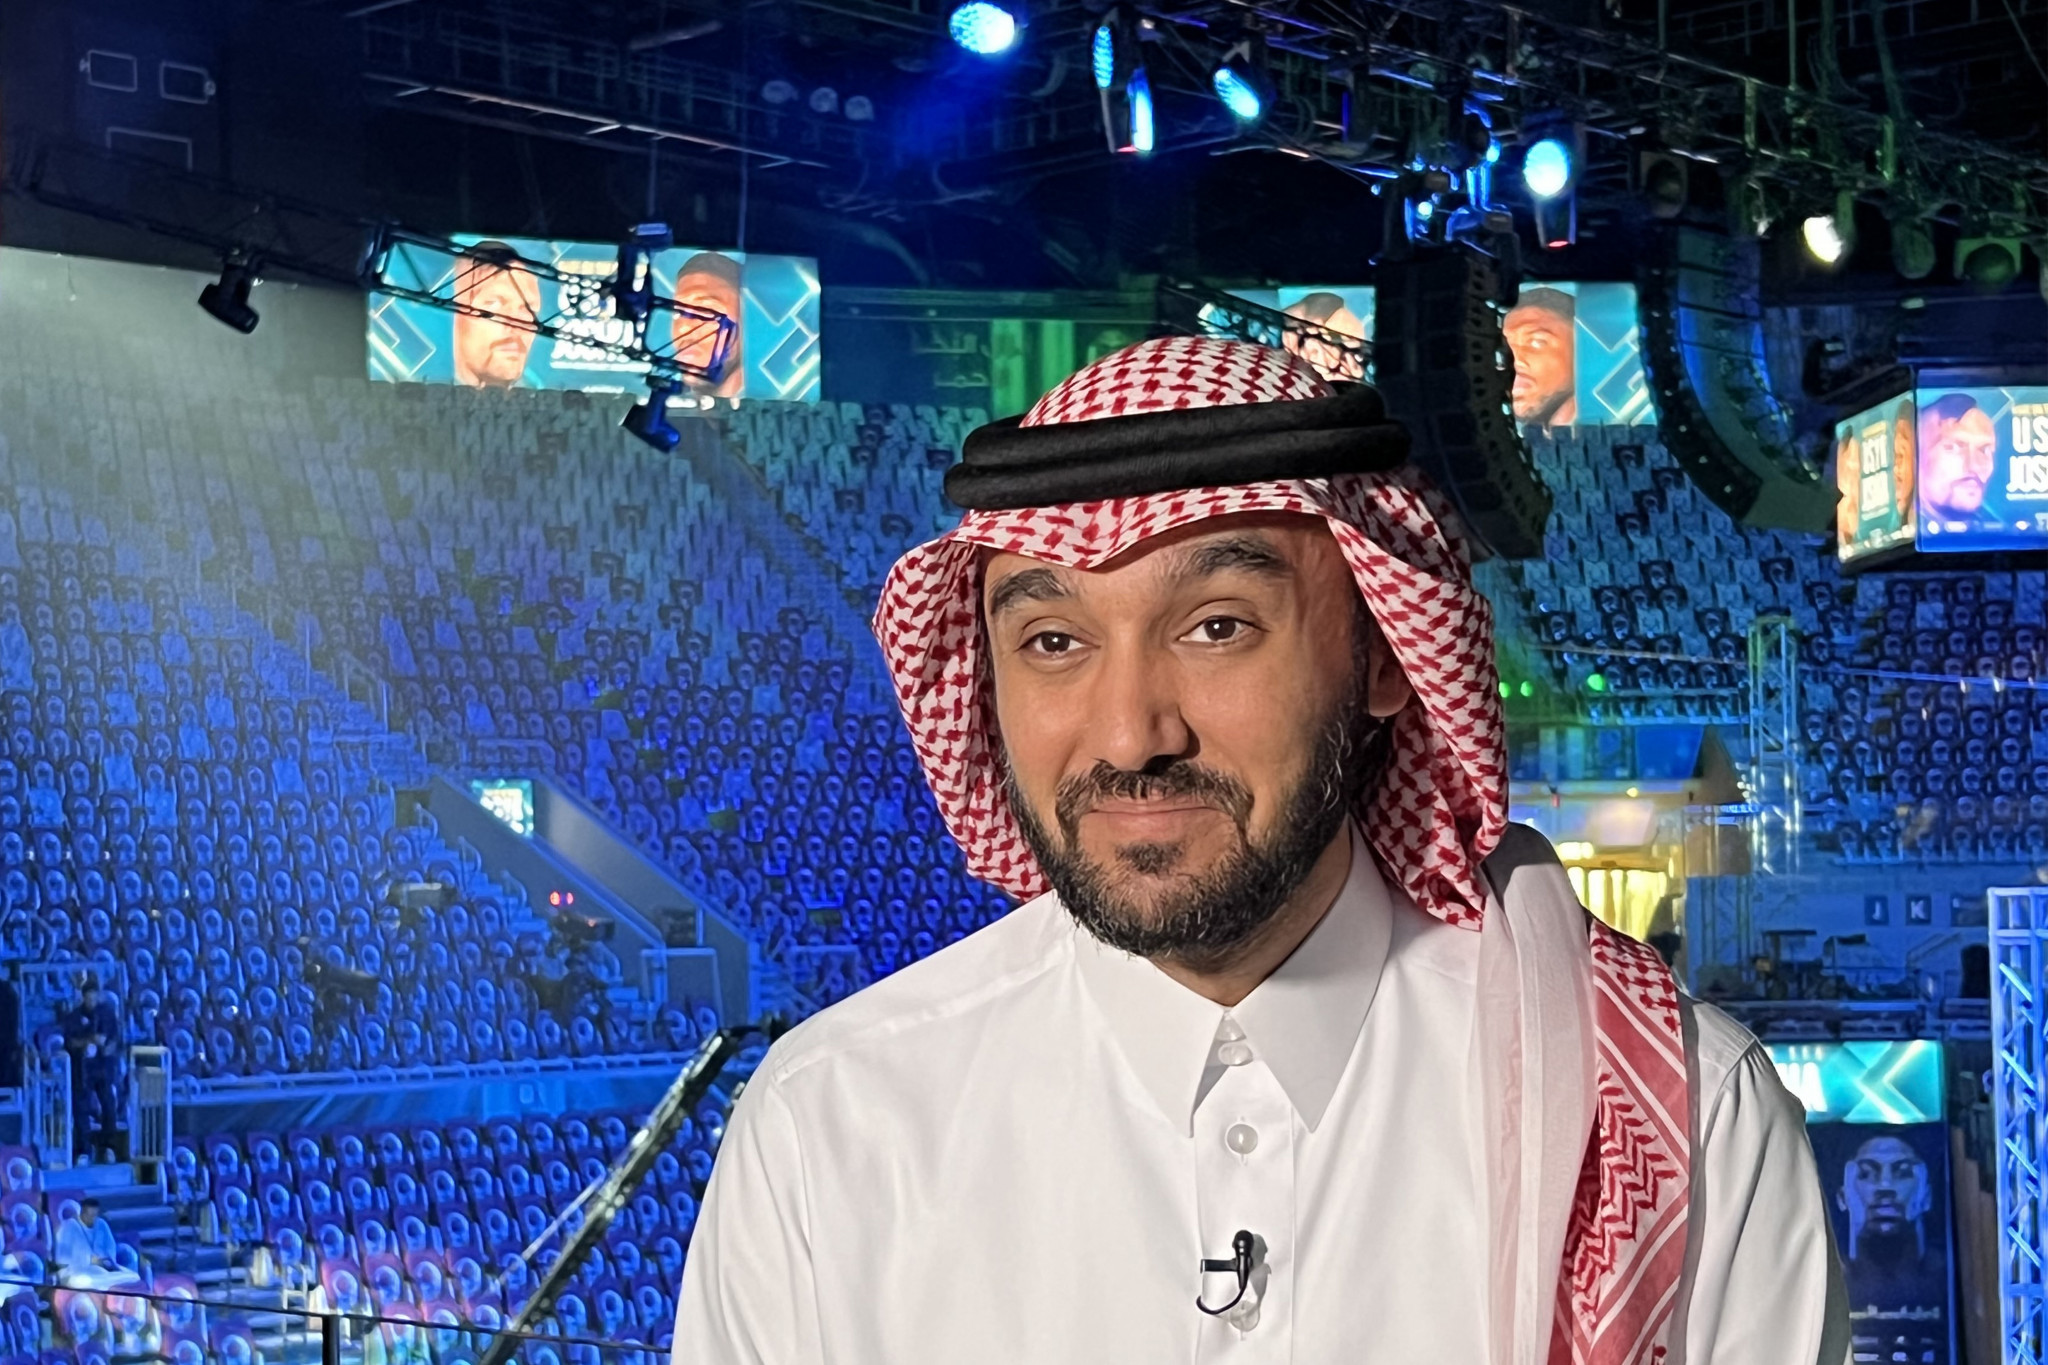 Saudi Arabian Minister of Sport Prince Abdulaziz bin Turki Al Faisal said the Saudi Games would help produce international-level athletes ©Getty Images